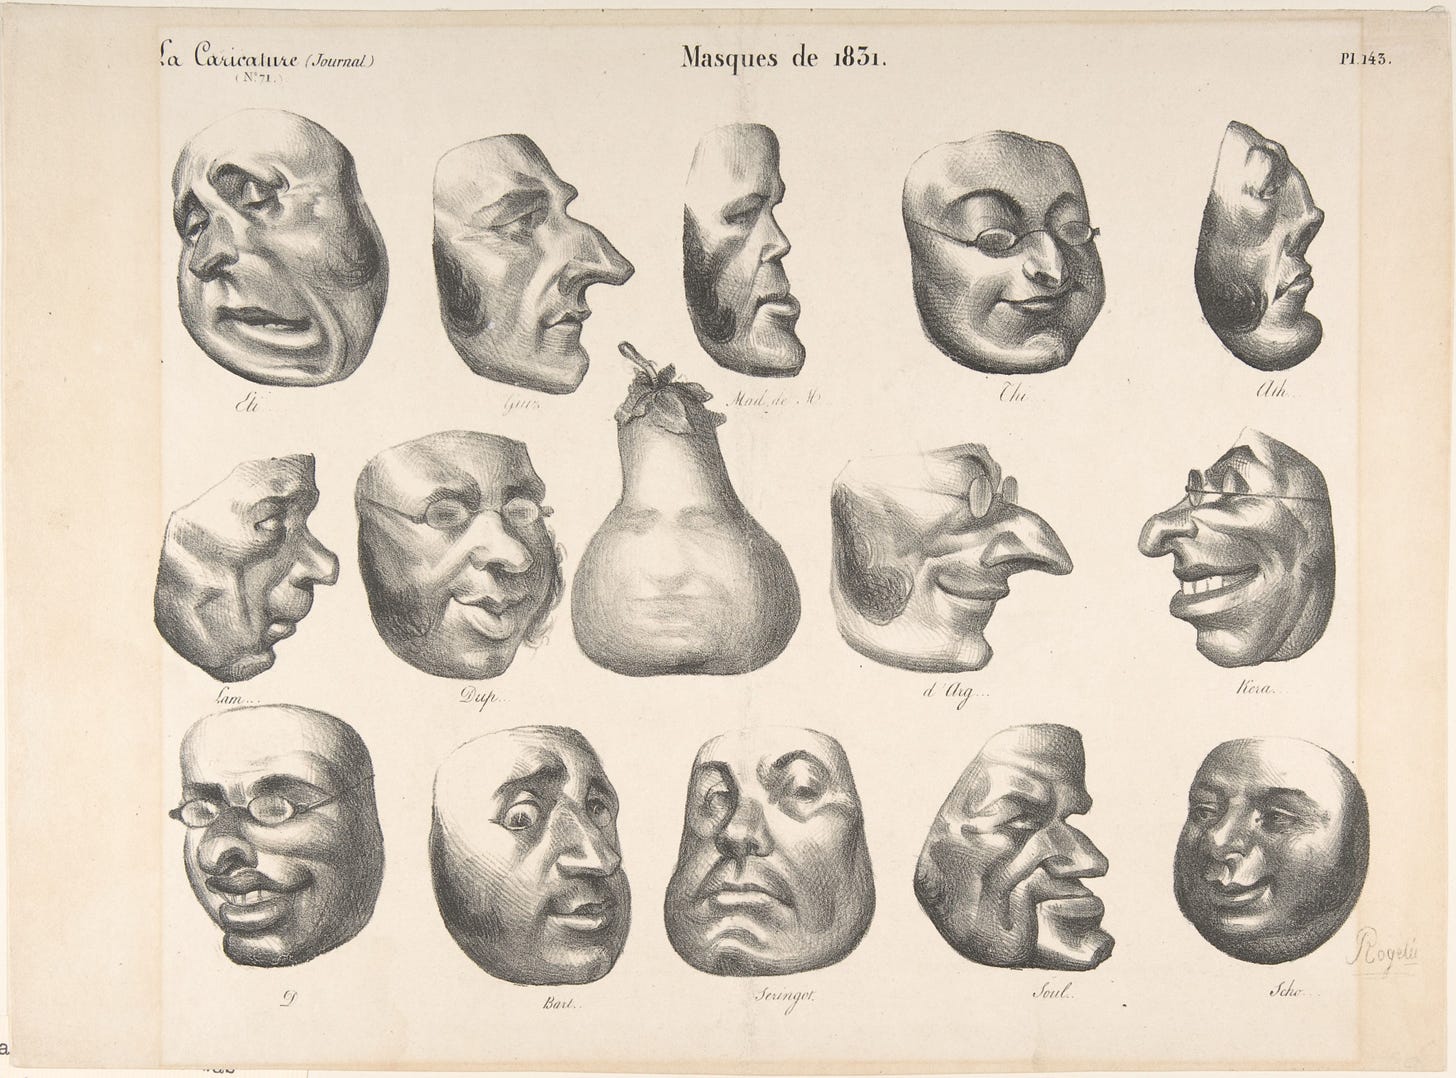 Honoré Daumier | Masks of 1831, published in La Caricature | The  Metropolitan Museum of Art